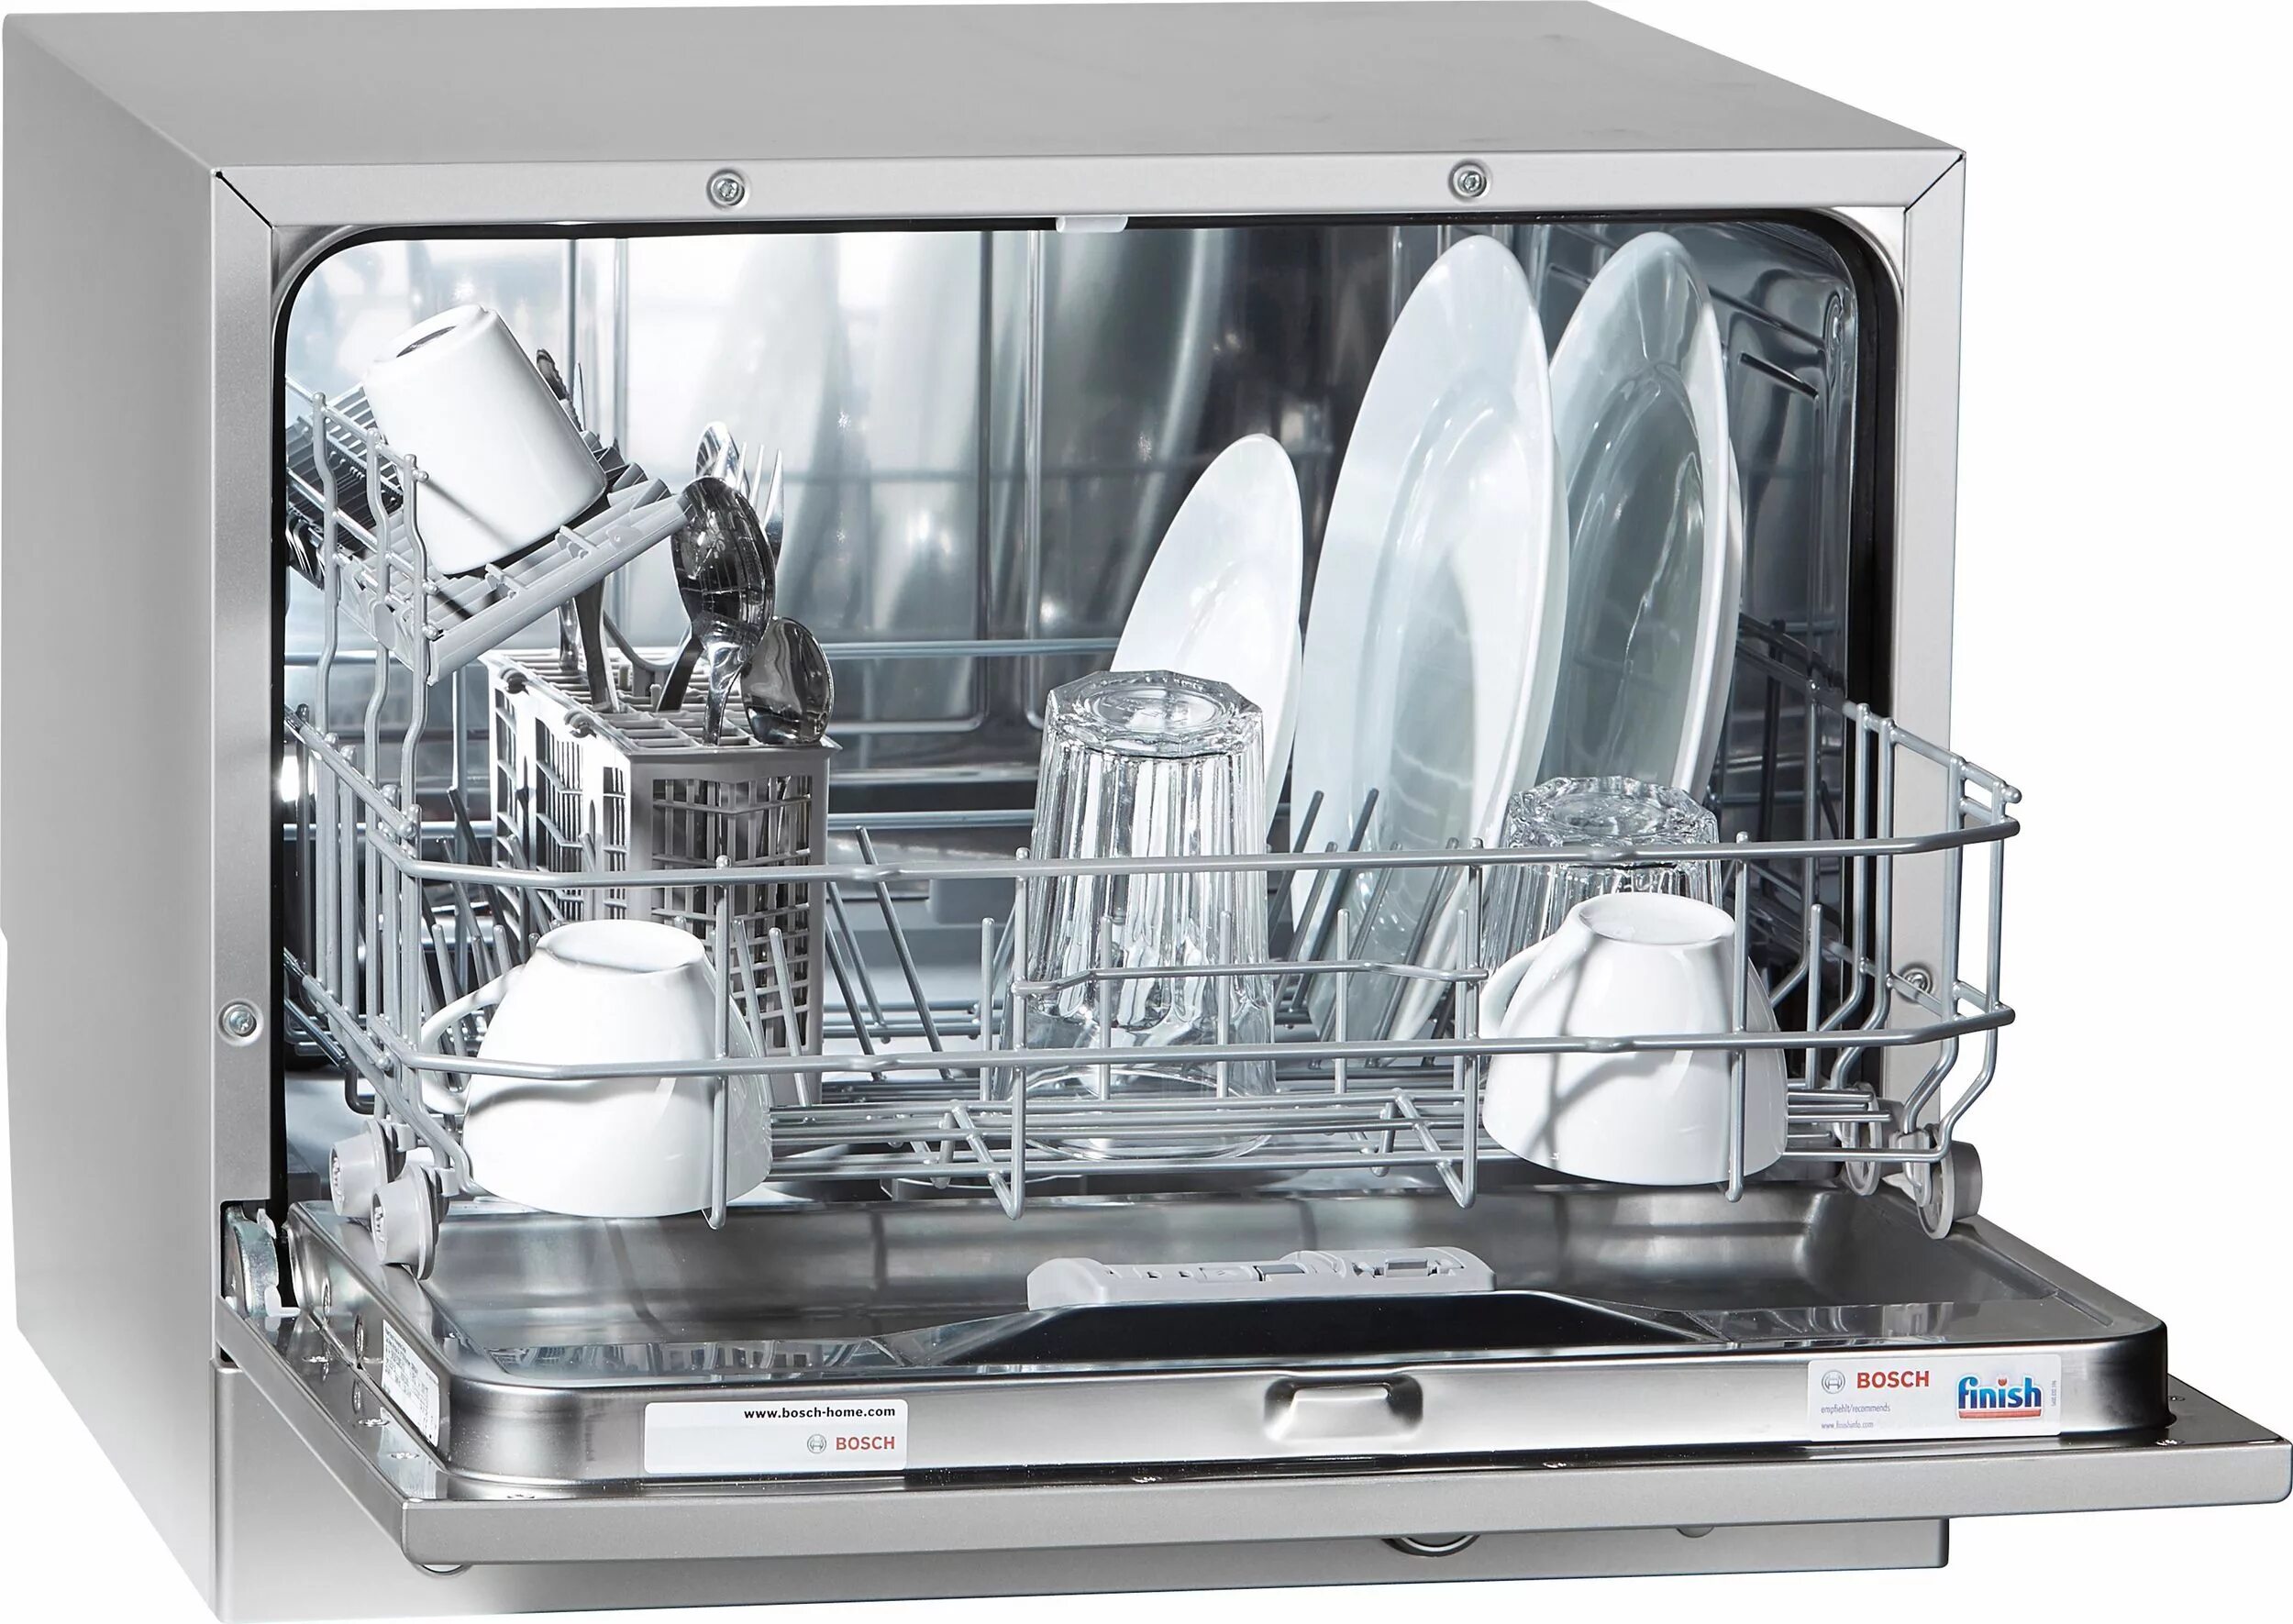 Посудомоечная машина cdw 42 043. Посудомоечная машина Bosch SKS 51e28. Посудомоечная машина бош настольная sks51e88. Компактная посудомоечная машина Bosch sks51e32eu, белый. Компактные посудомоечные машины Bosch s2r1b.